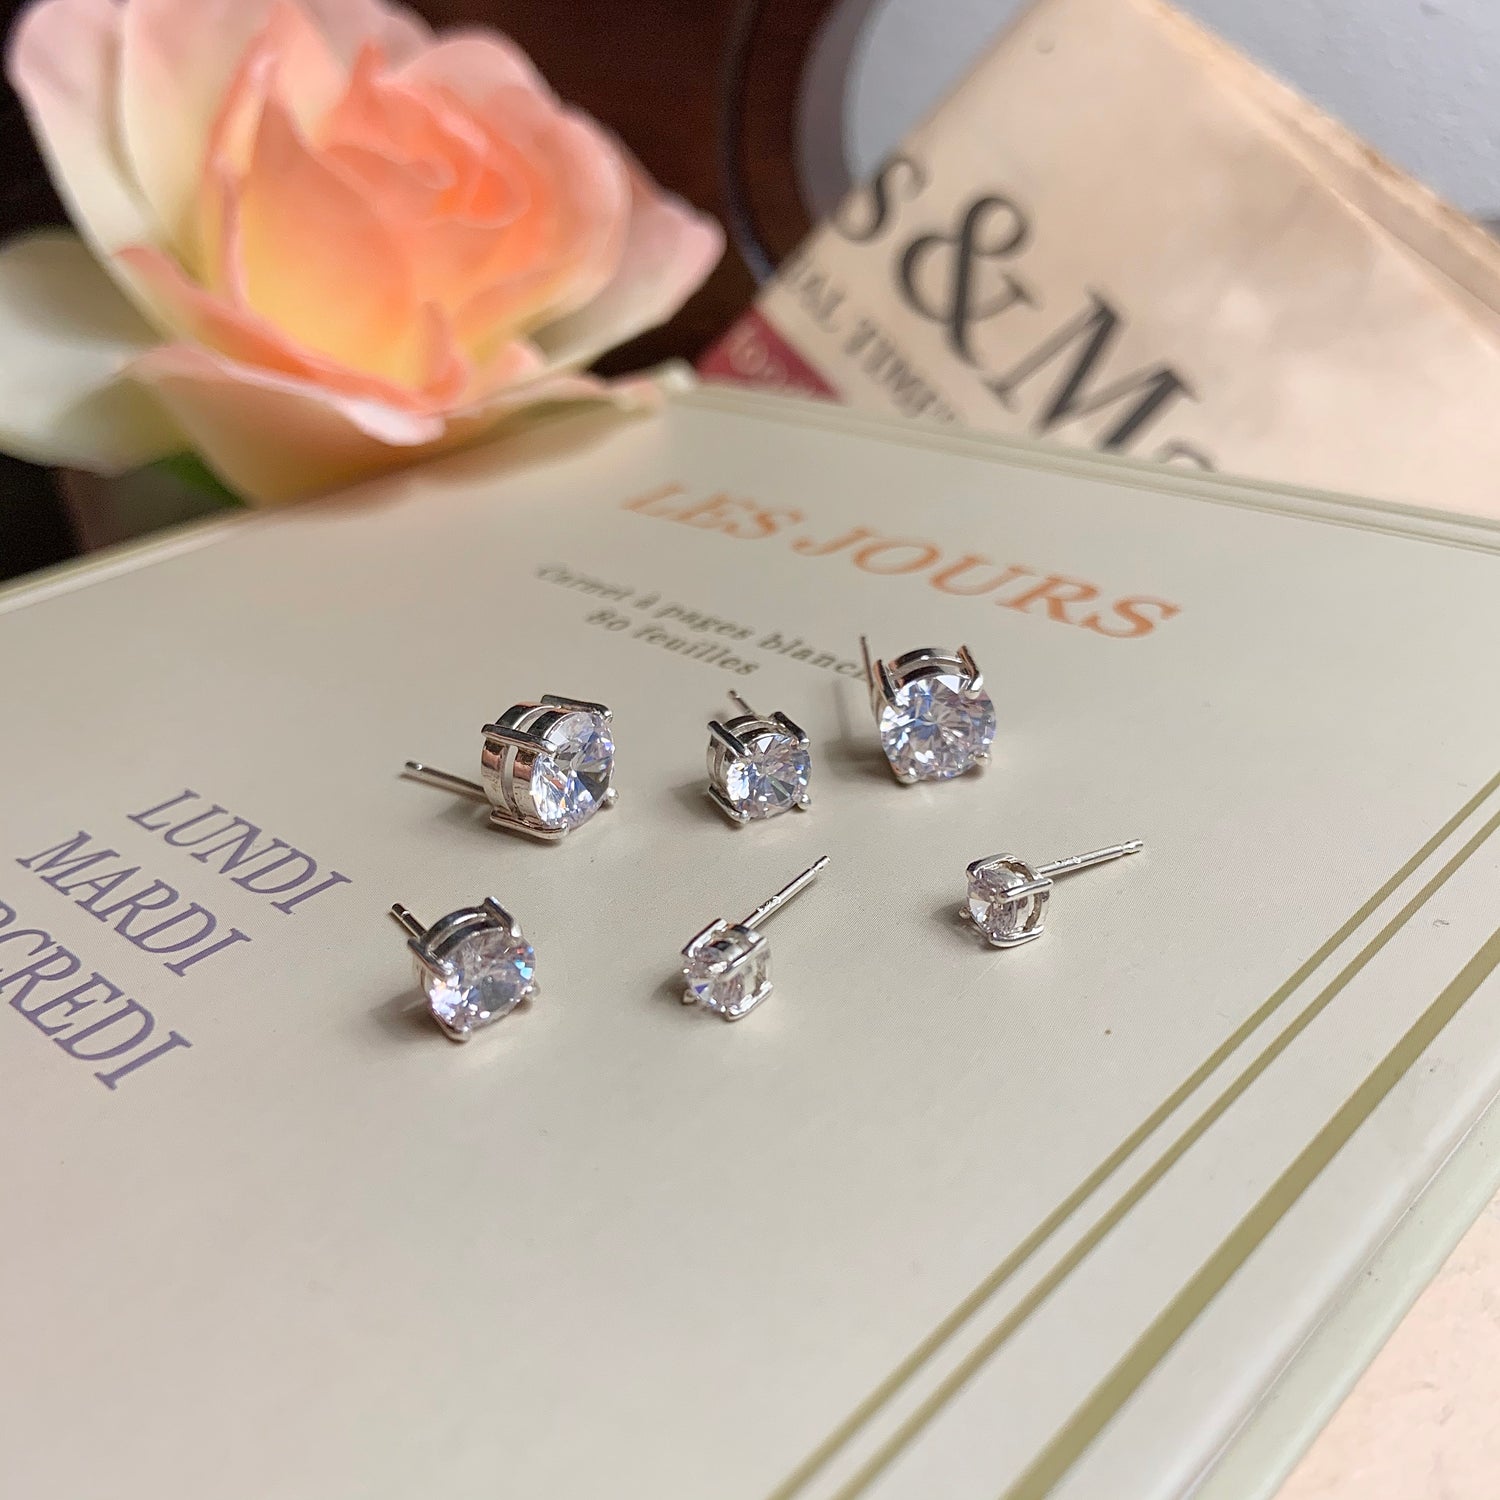 Handmade Sterling Silver Cubic Zirconia Diamond Stud Earrings - MARMELO USA